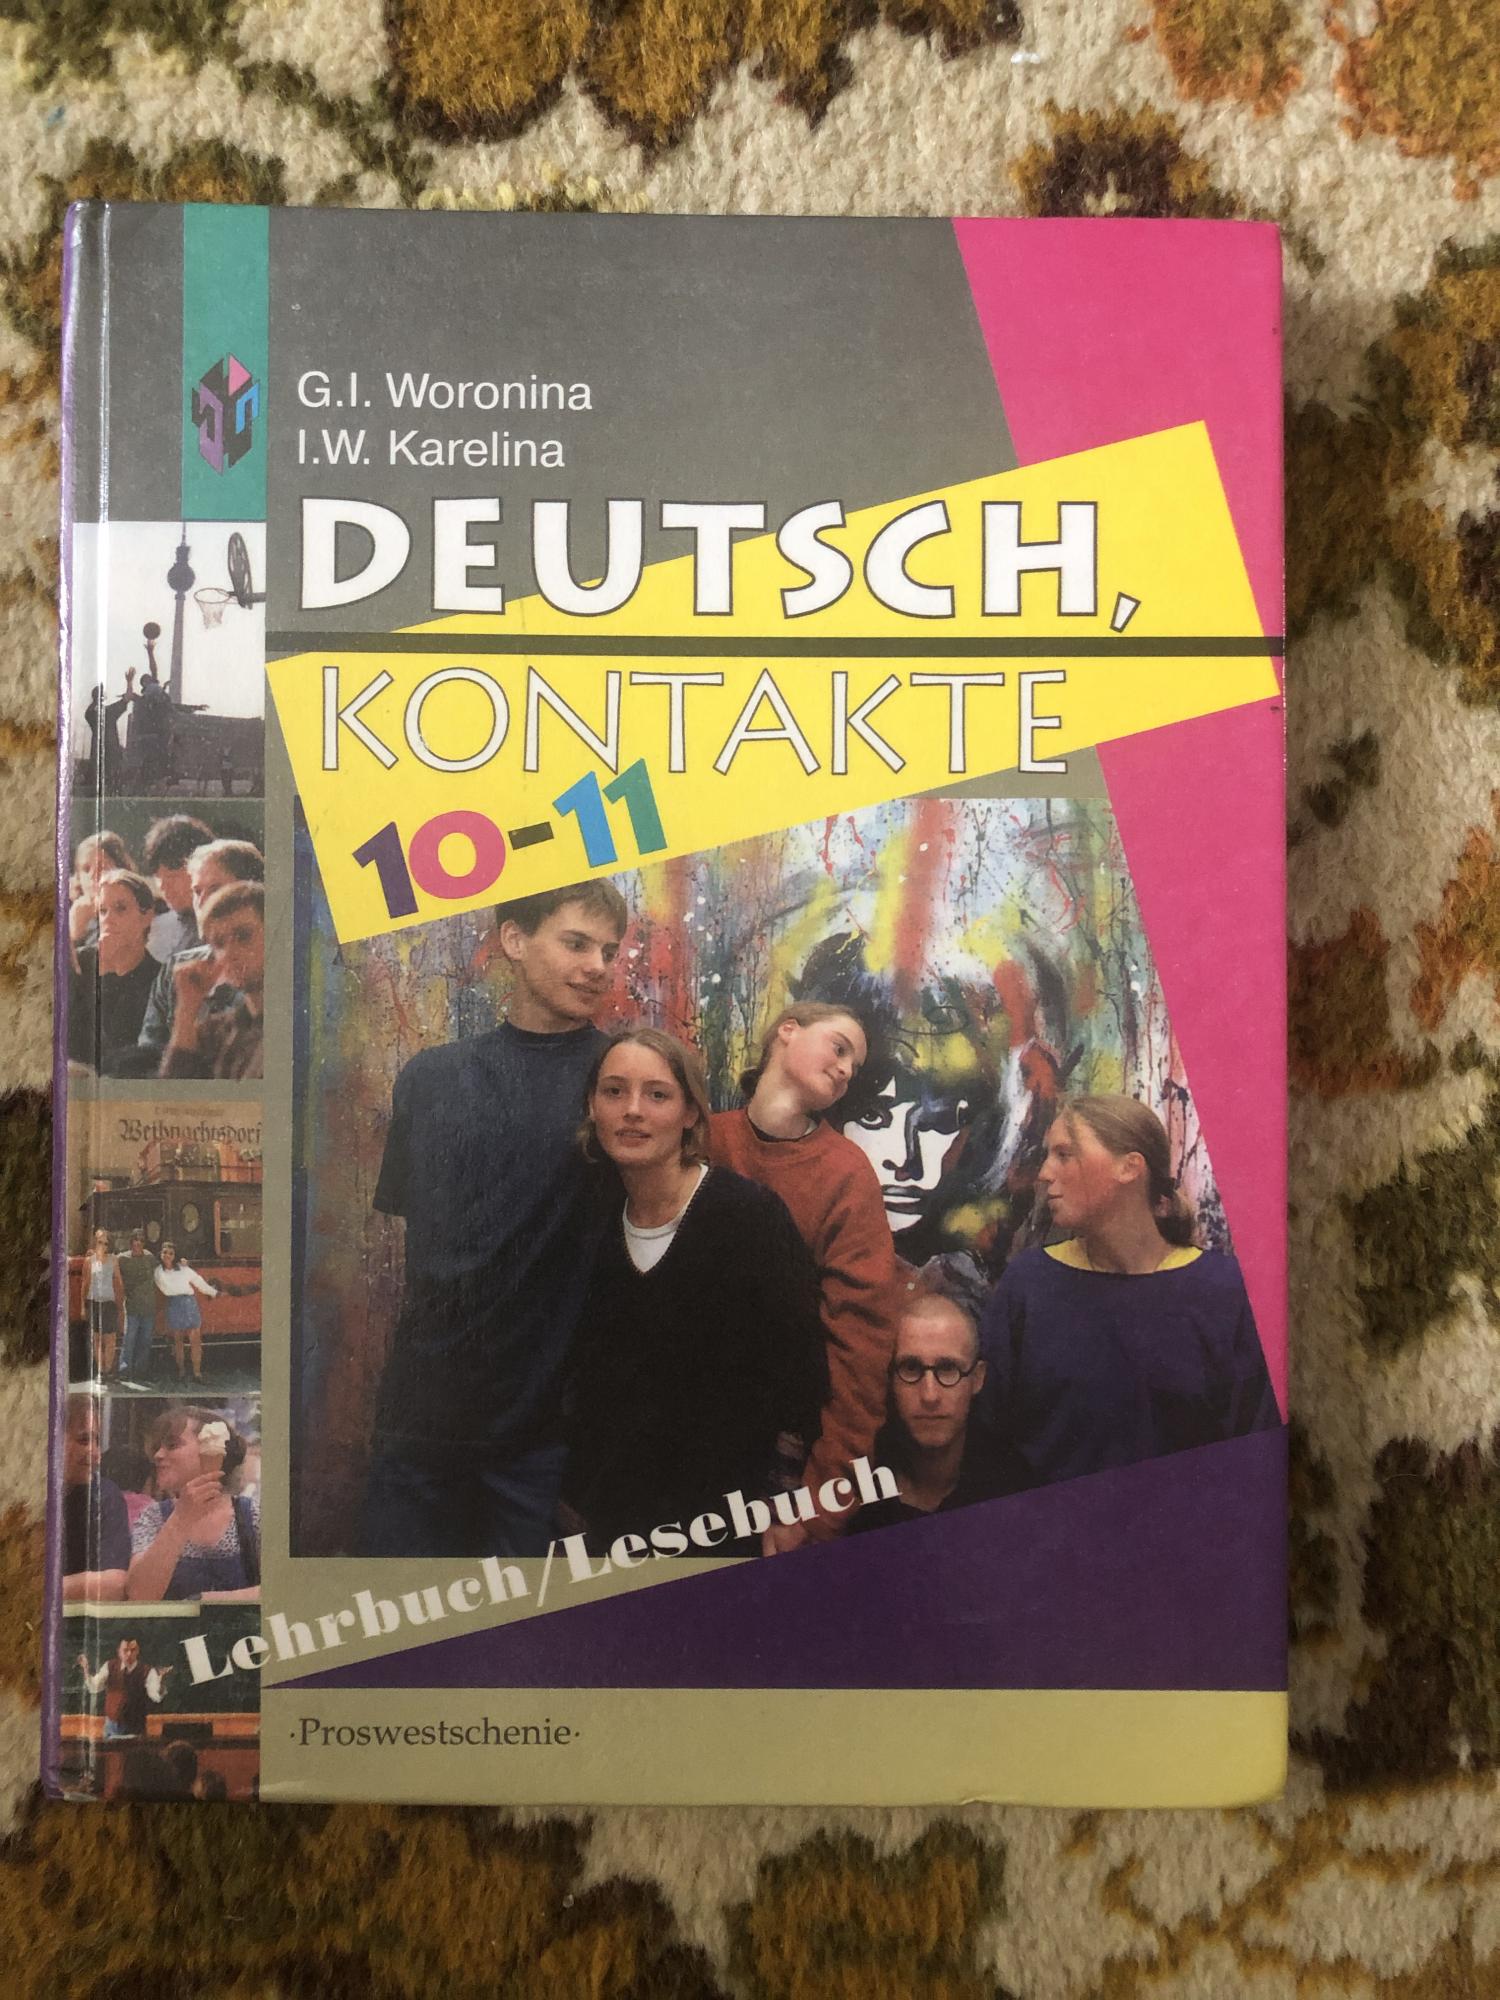 Учебник мозаика немецкий